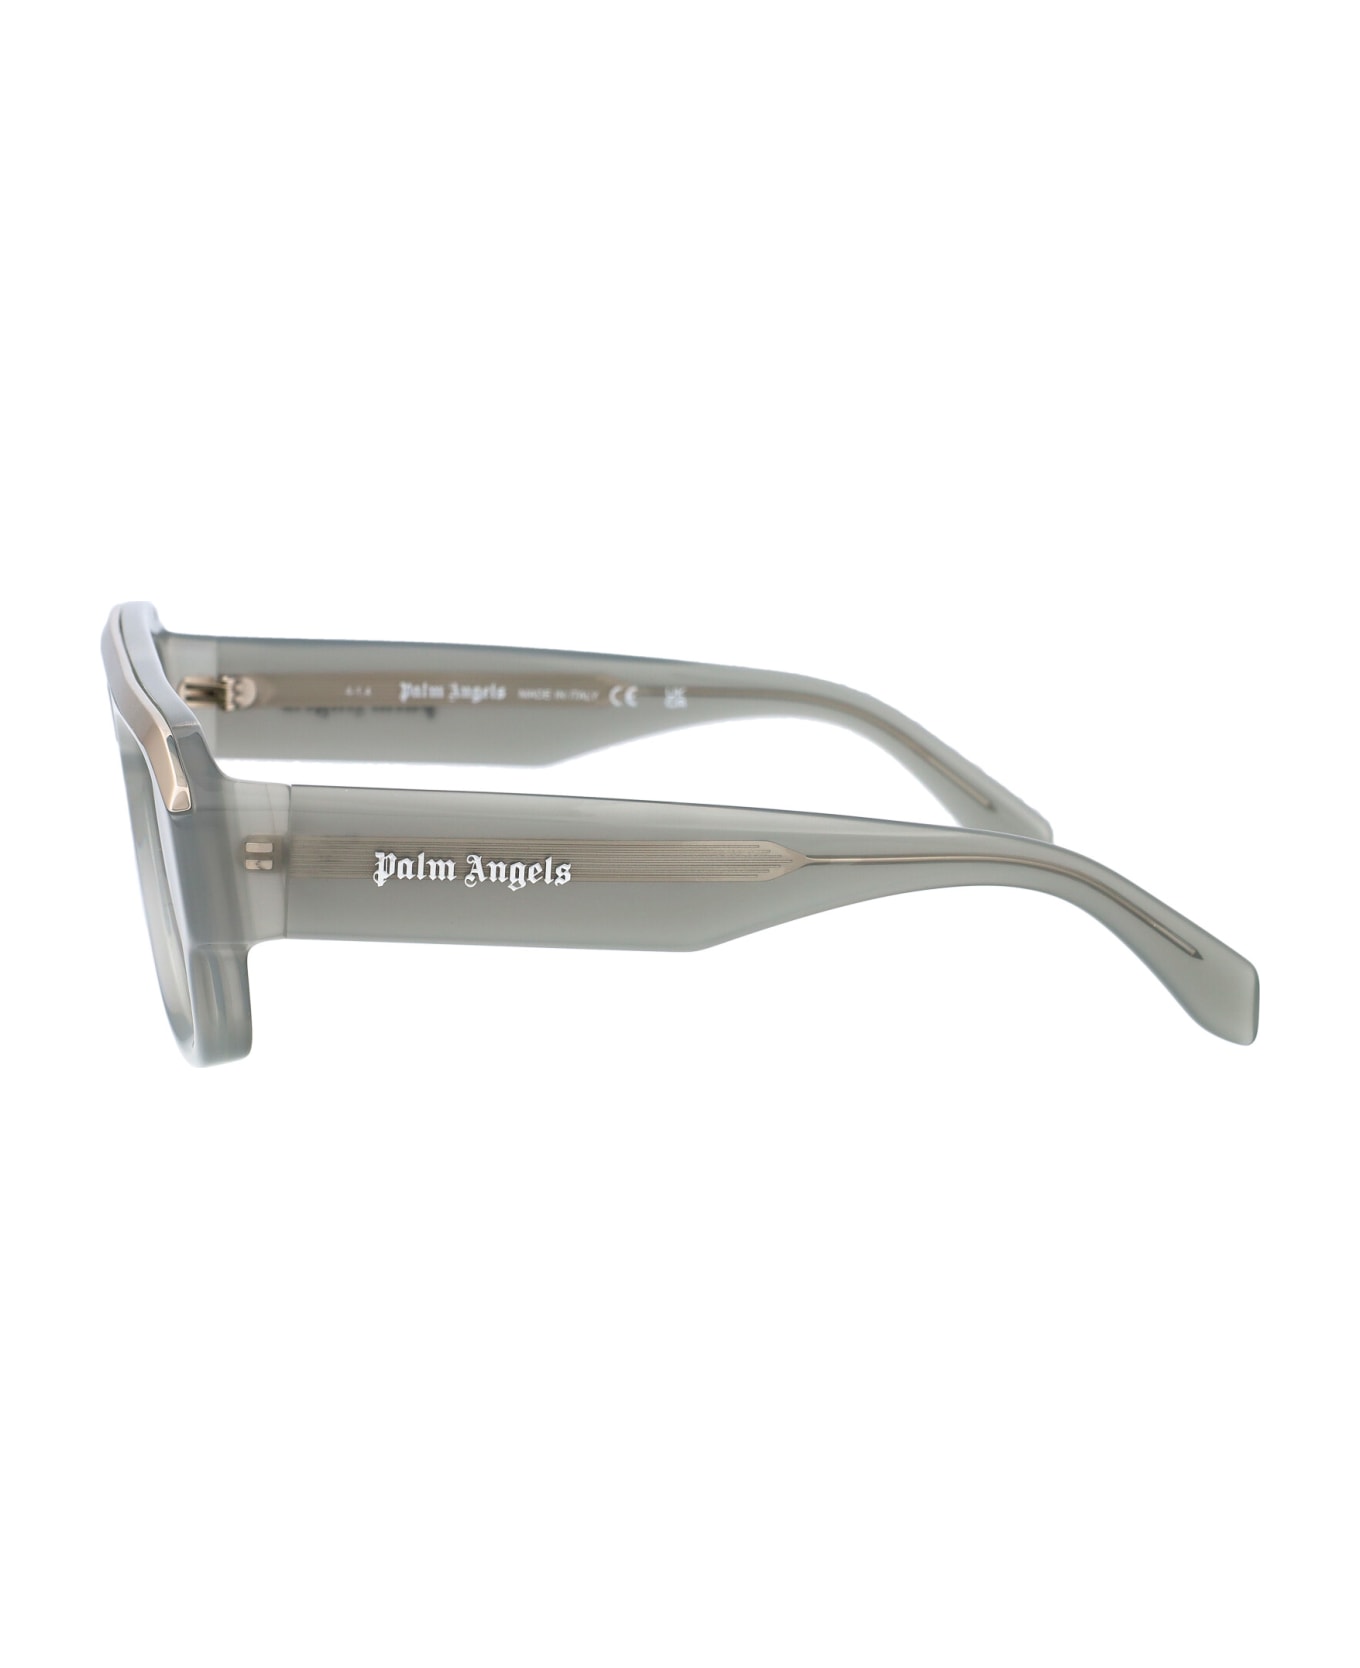 Palm Angels Stockton Sunglasses - 0955 GREY 